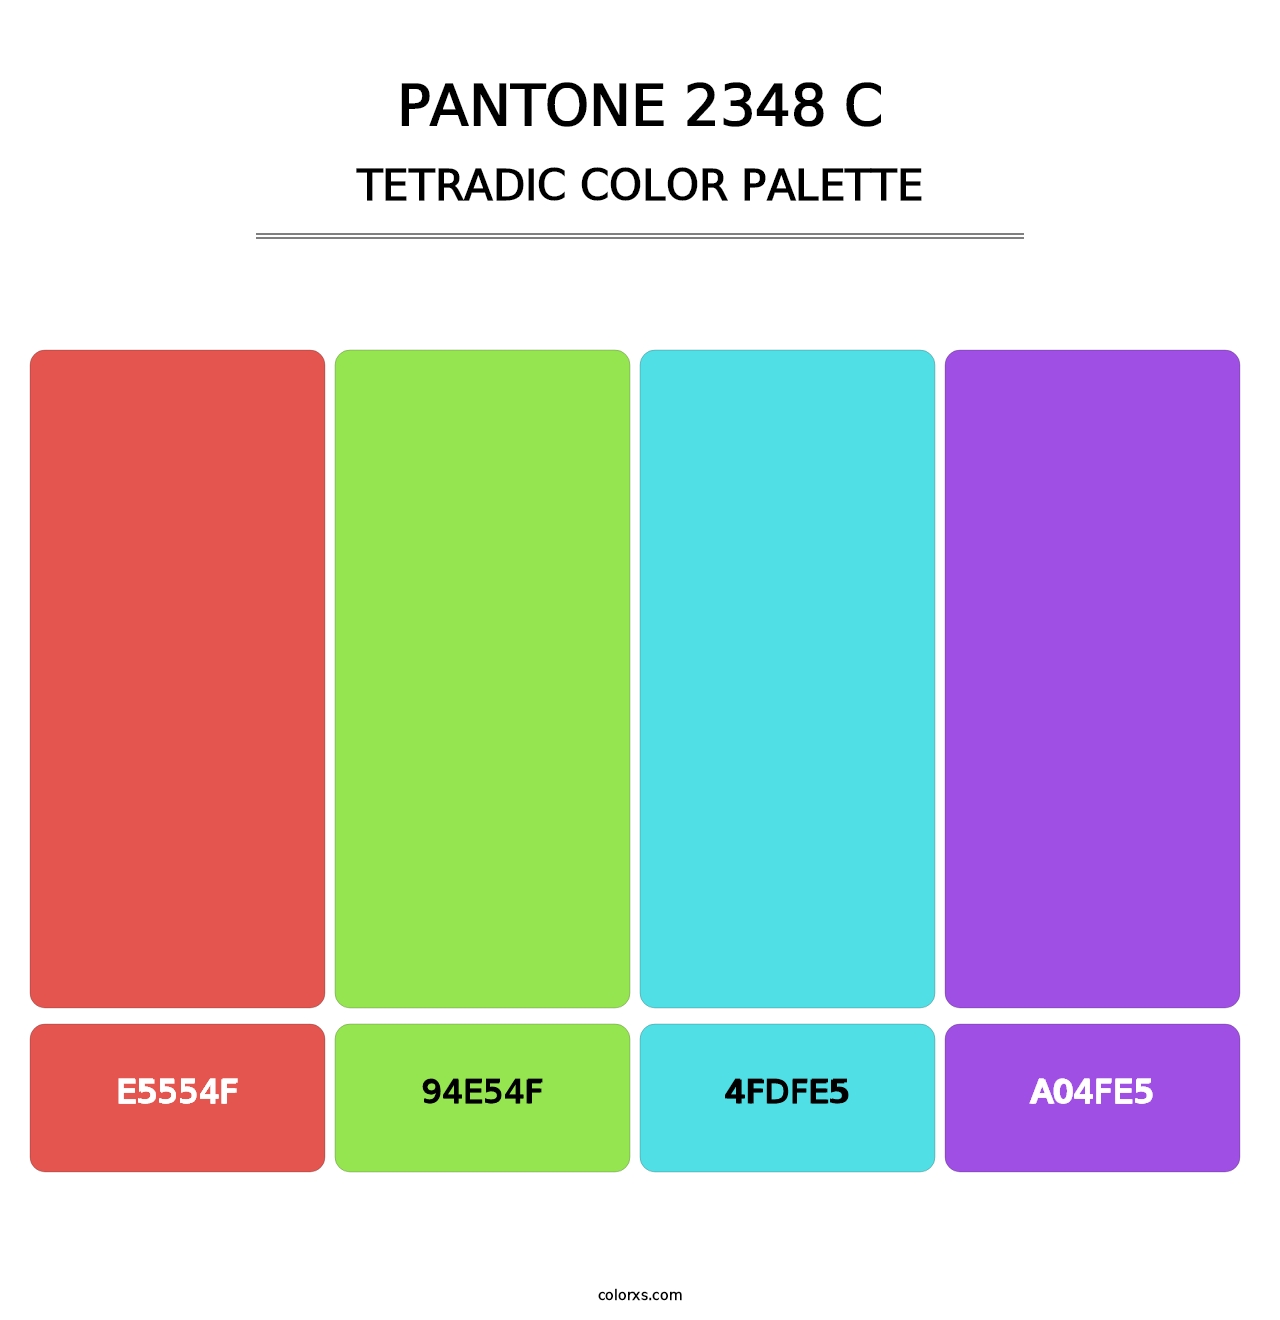 PANTONE 2348 C - Tetradic Color Palette